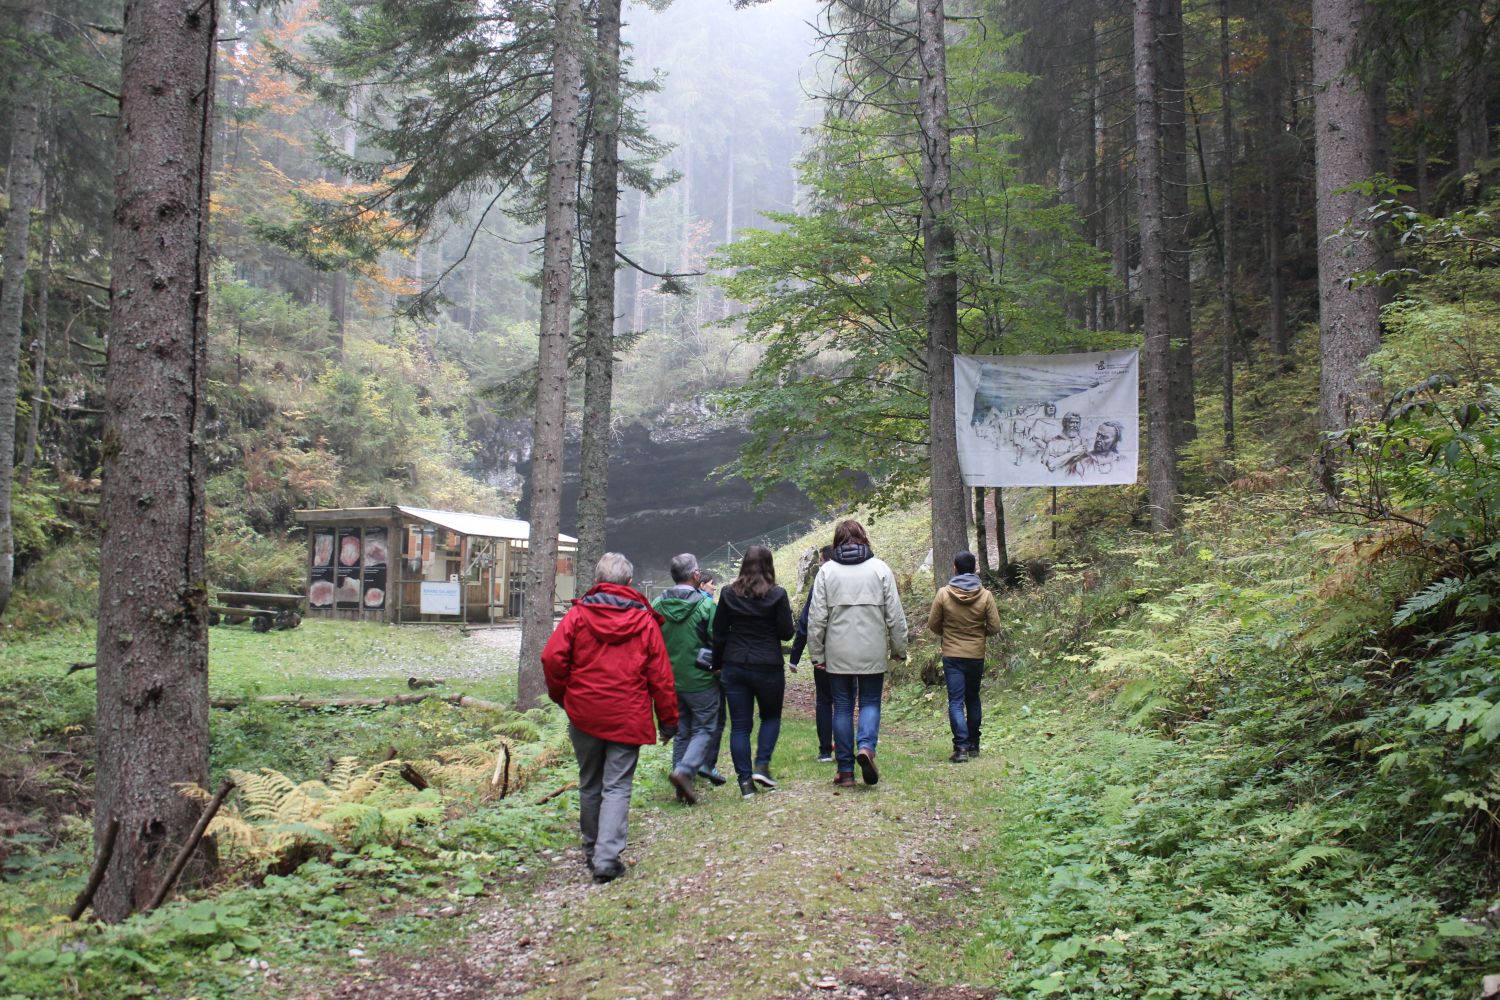 A group walking through wood